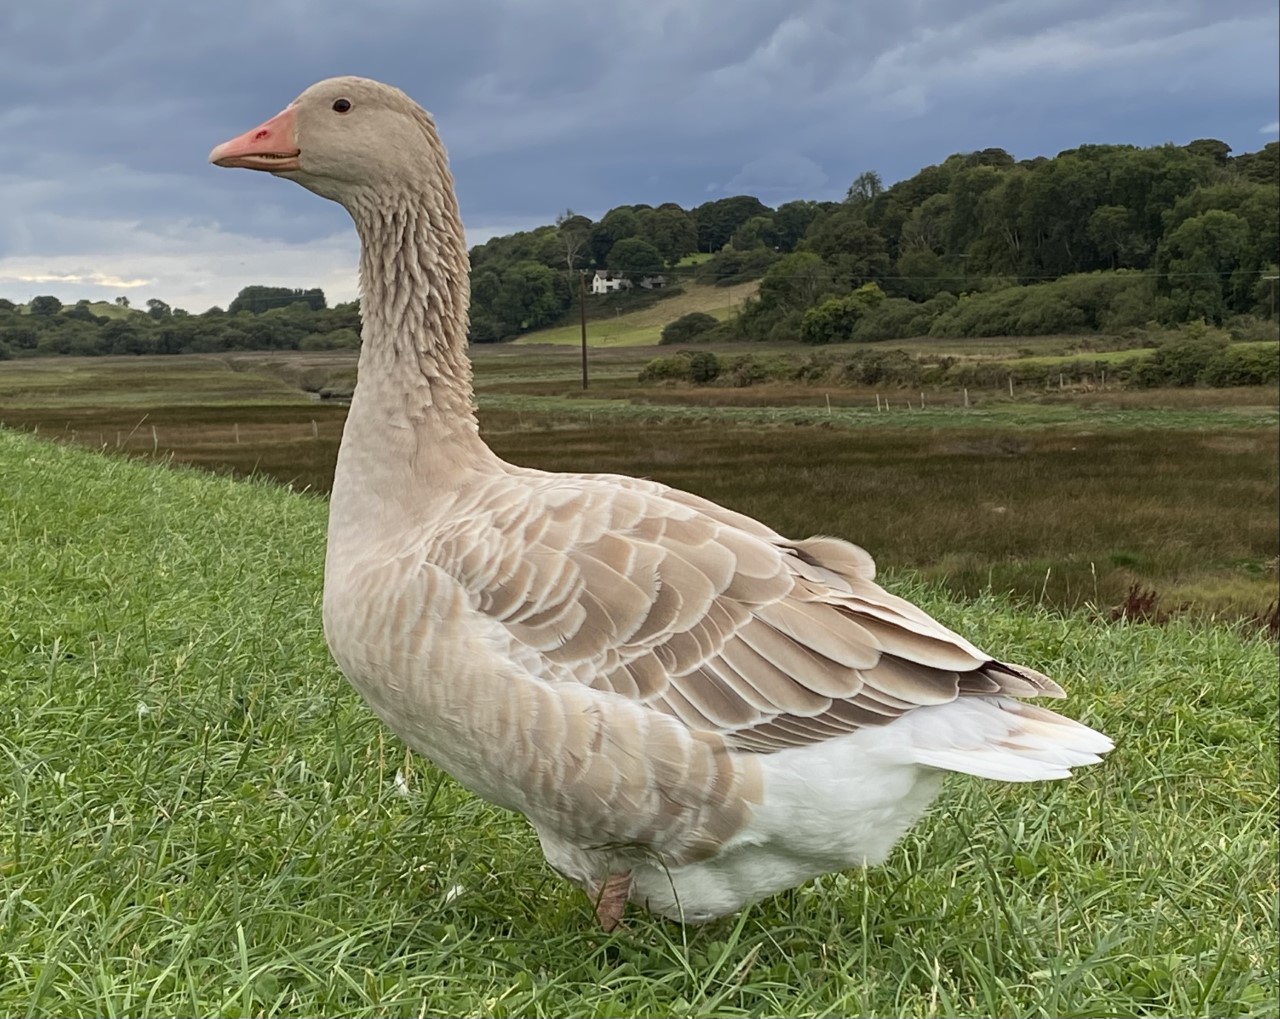 American Buff Goose - British Waterfowl Association